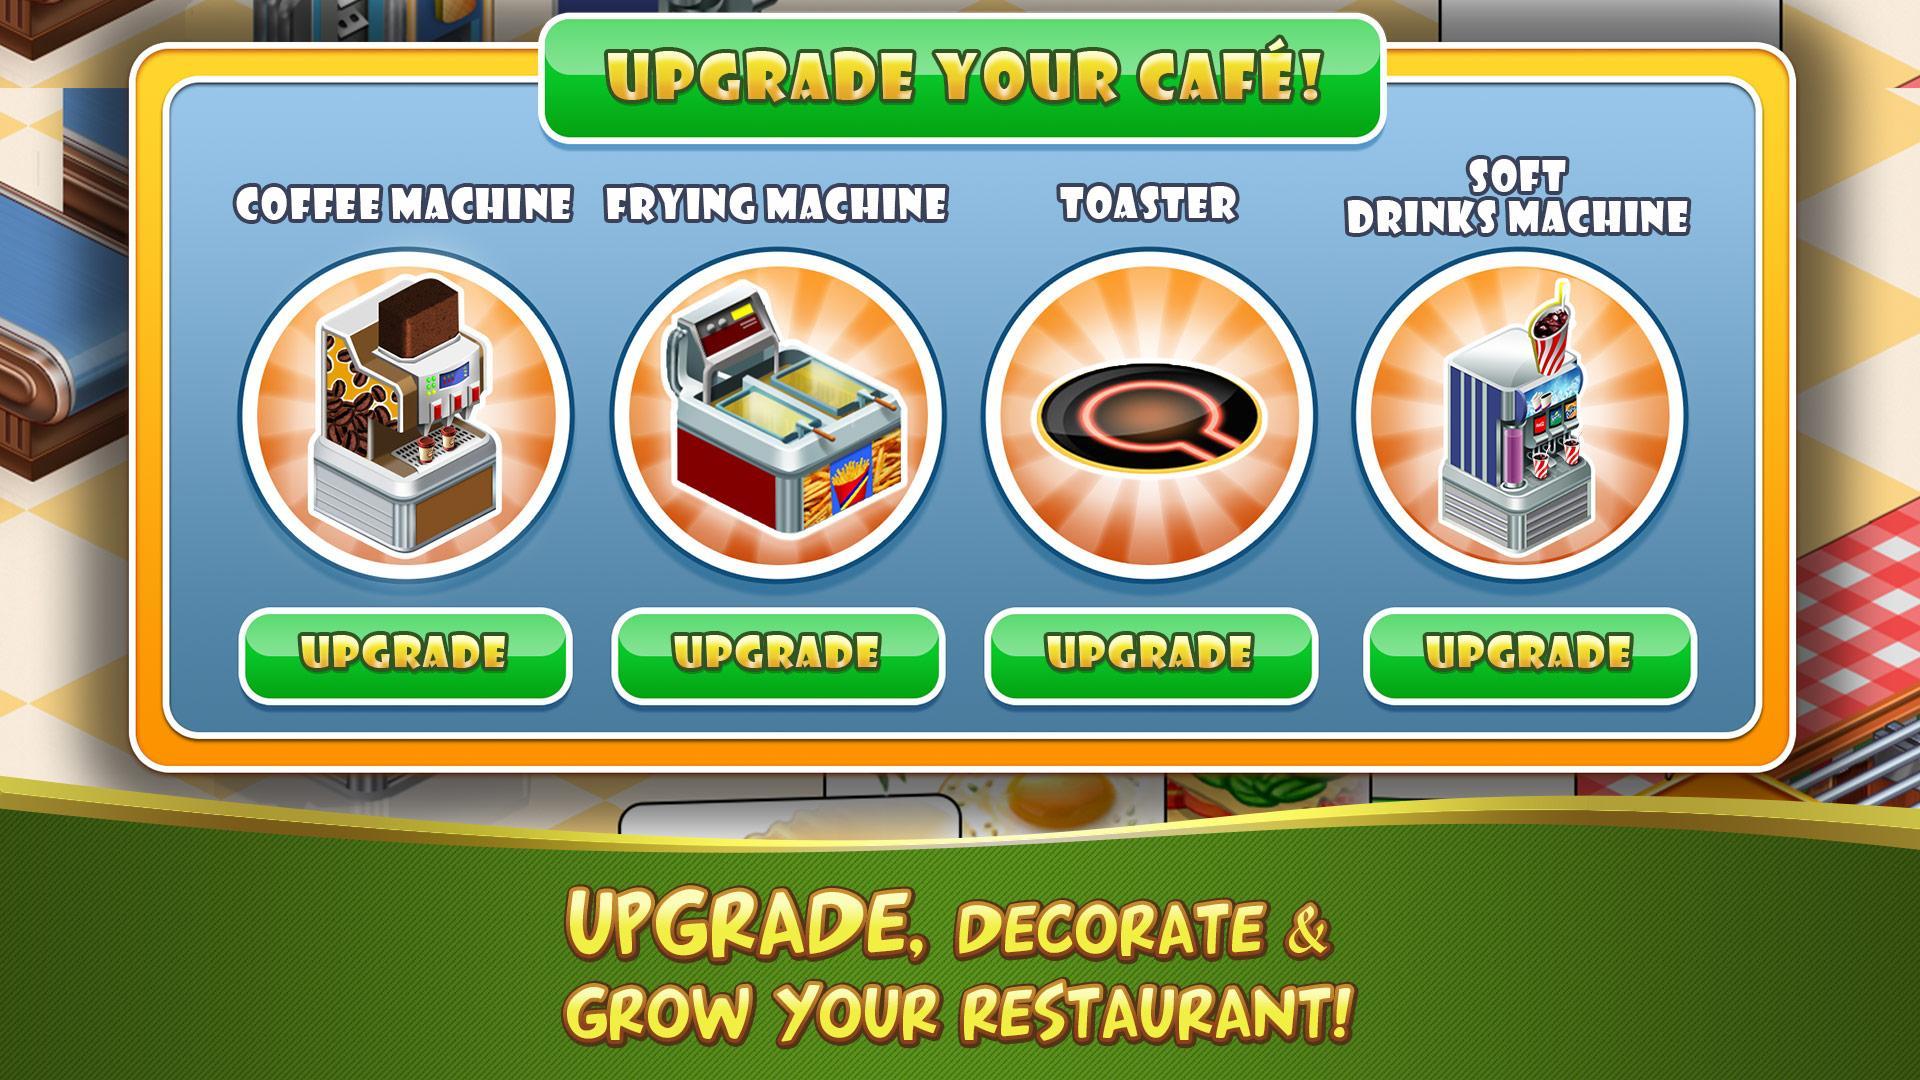 Screenshot of Stand O’Food City: Frenzy